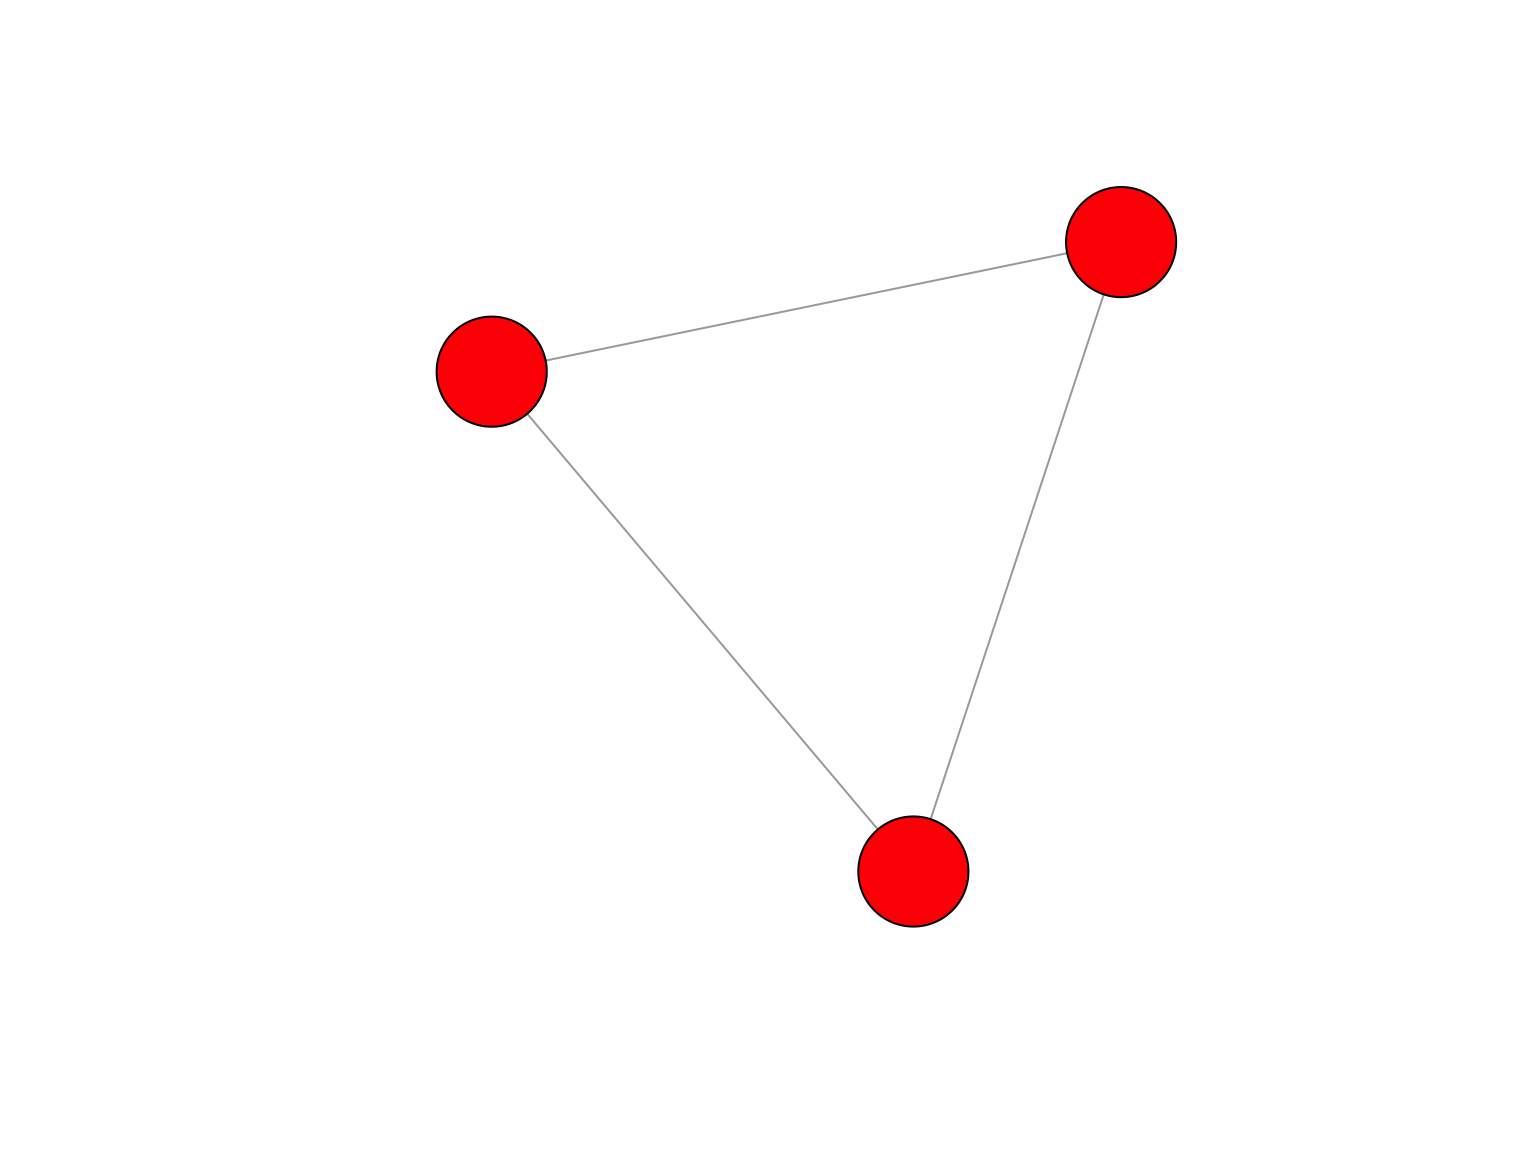 Quelques exemples de motifs comme des triangles, cliques, étoiles, cycles, arbres.